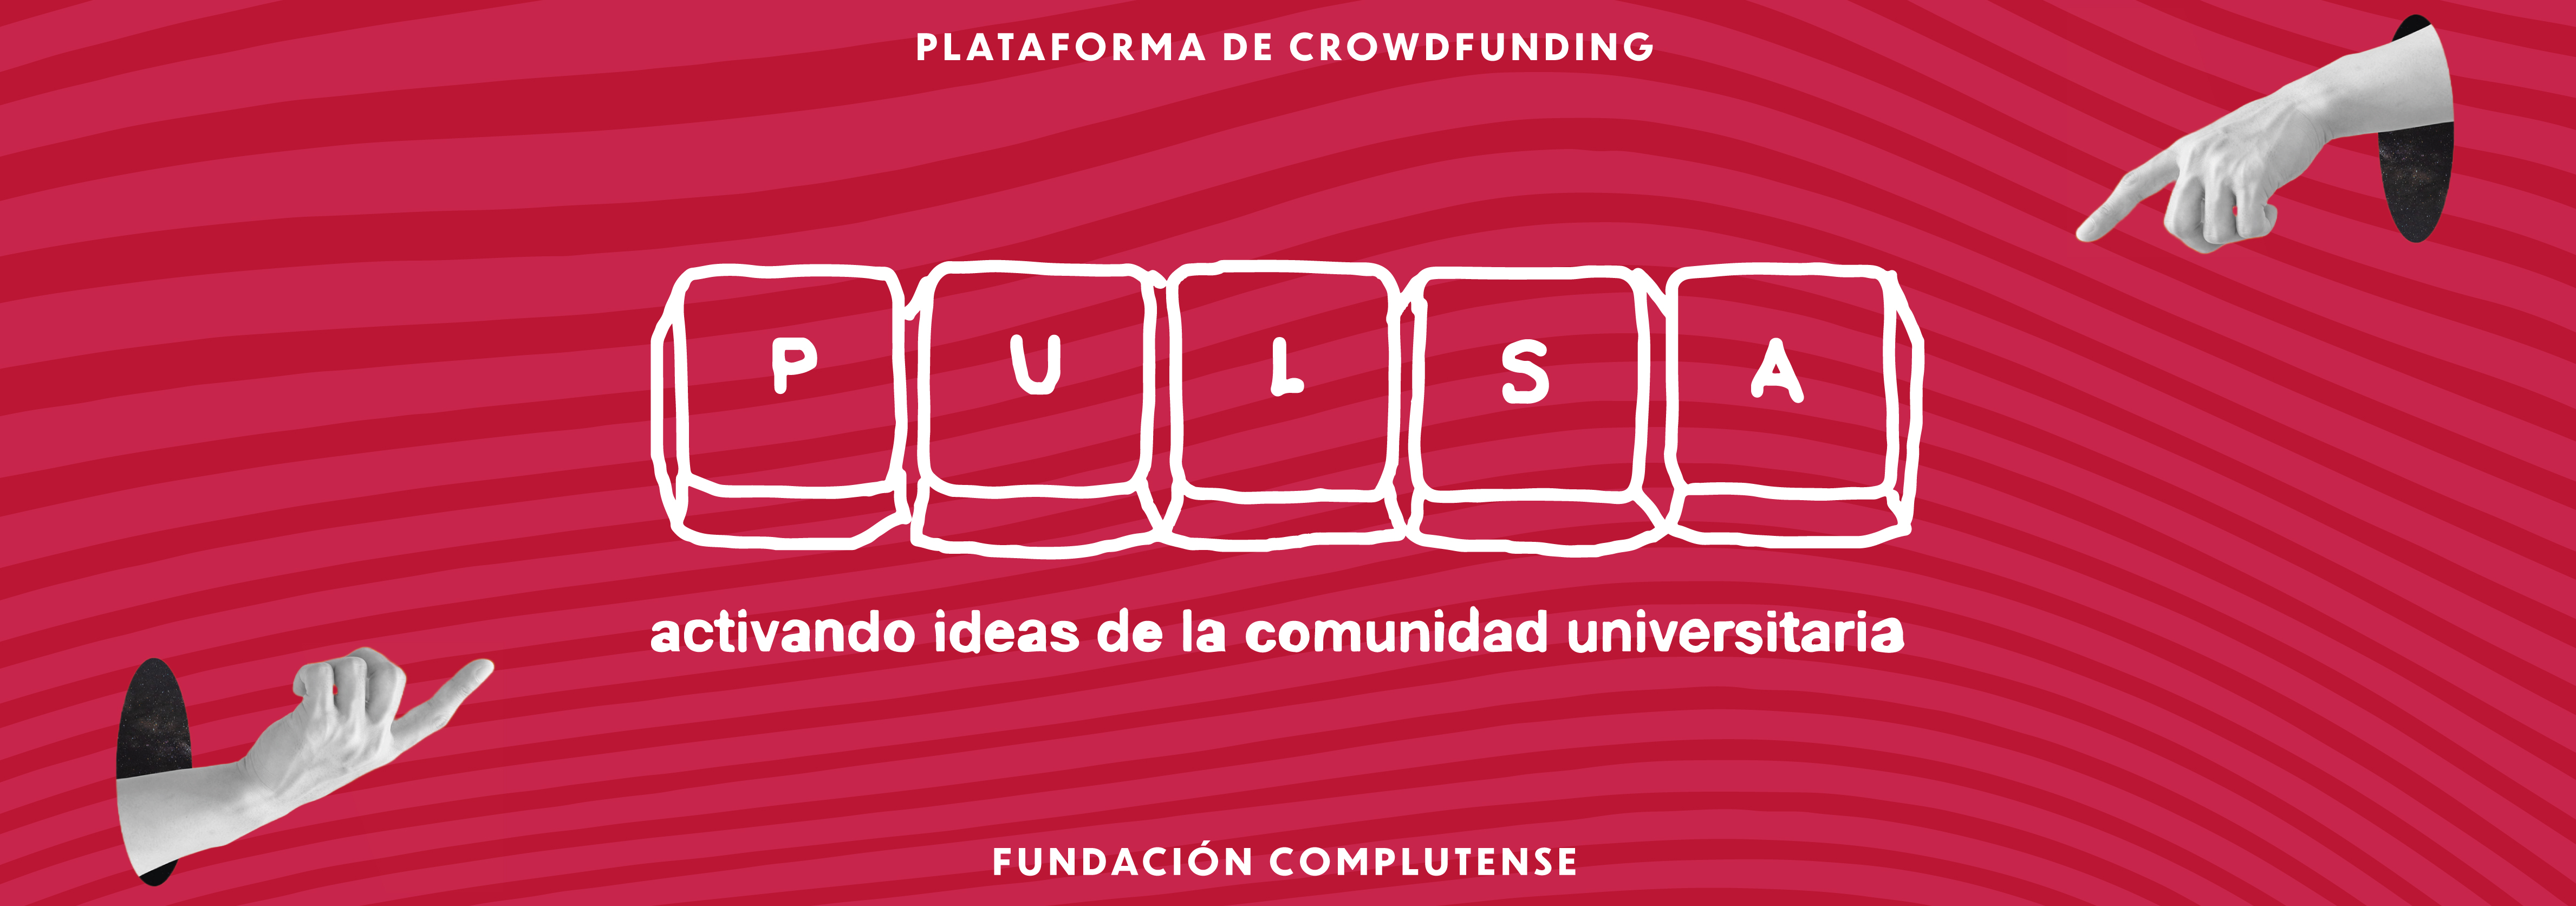 Plataforma de crowdfunding Fundación Complutense